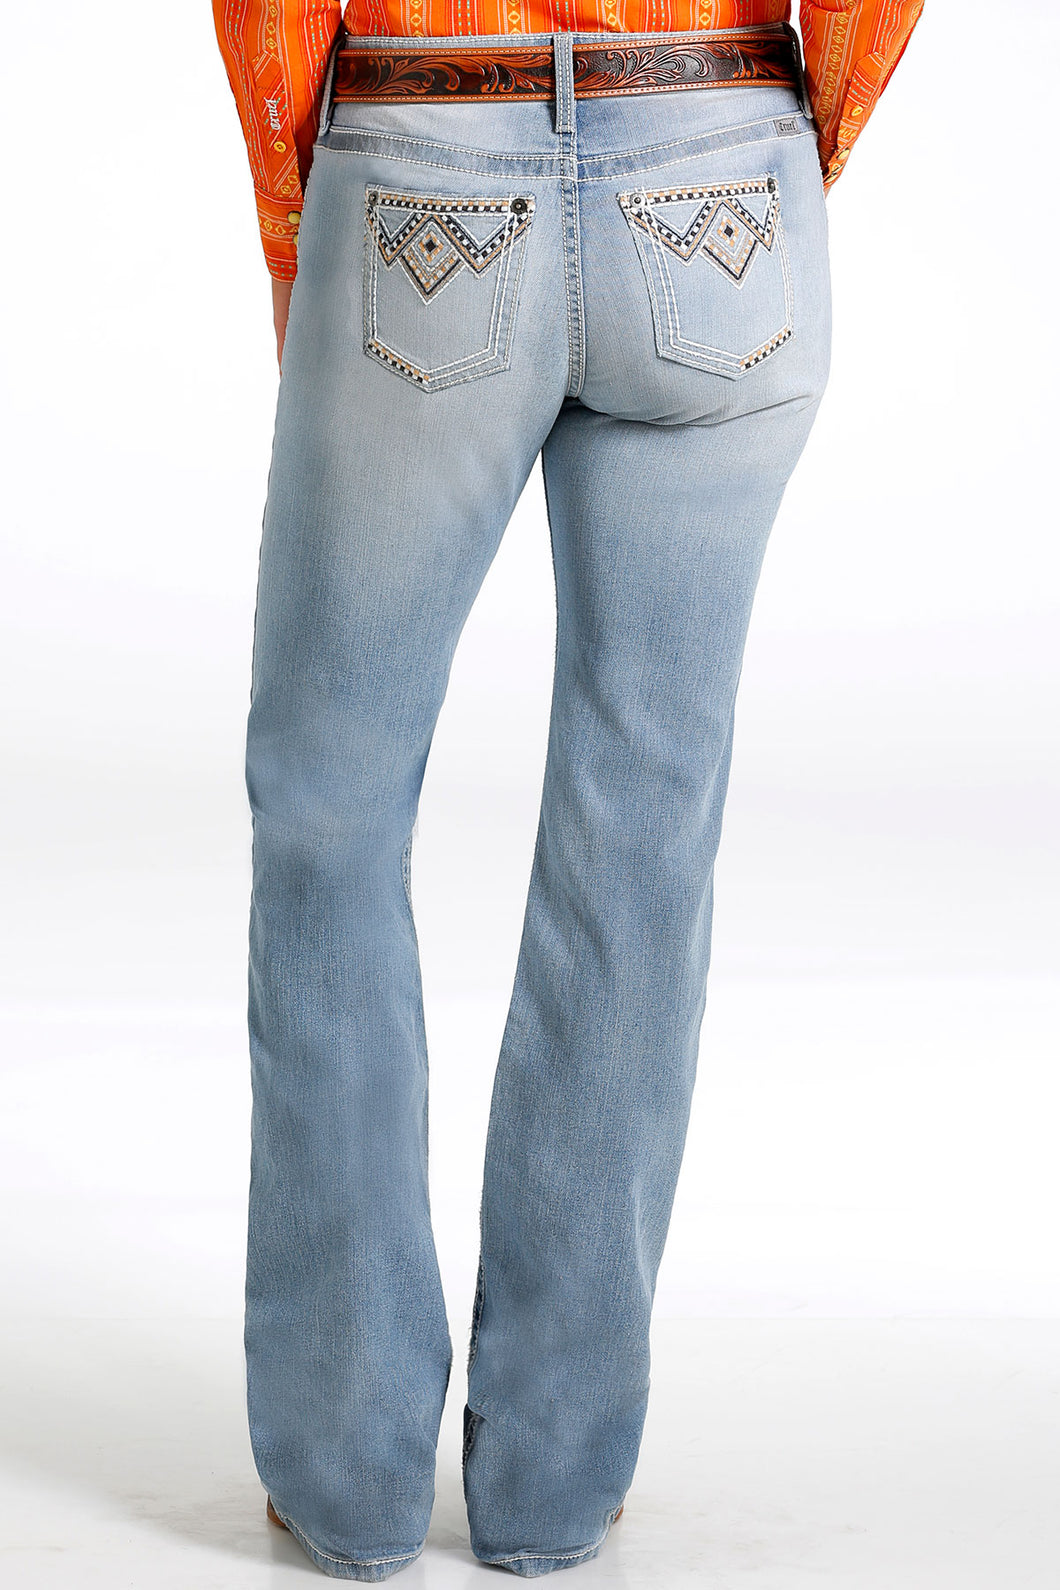 Bootcut Jeans For Women: लूज फिटिंग वाले ये पैंट हैं बेहद कंफर्टेबल, देंगे  मॉडर्न स्टाइलिश लुक | bootcut jeans for women to suit every silhouette |  HerZindagi